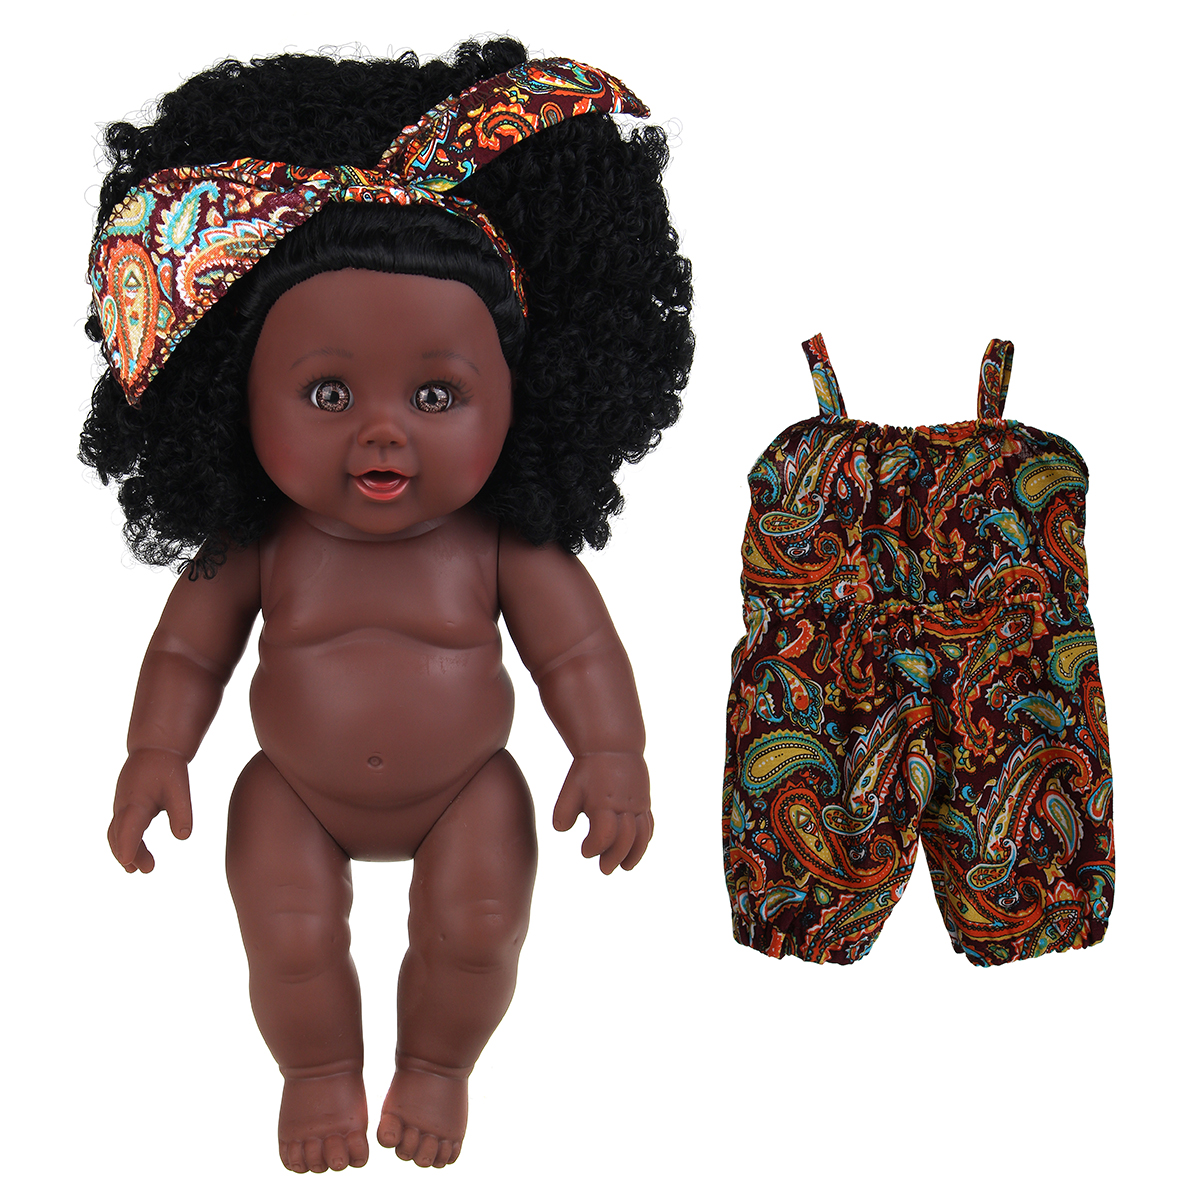 30CM-Silicone-Vinyl-African-Girl-Realistic-Reborn-Lifelike-Newborn-Baby-Doll-Toy-with-360deg-Moveabl-1817562-7